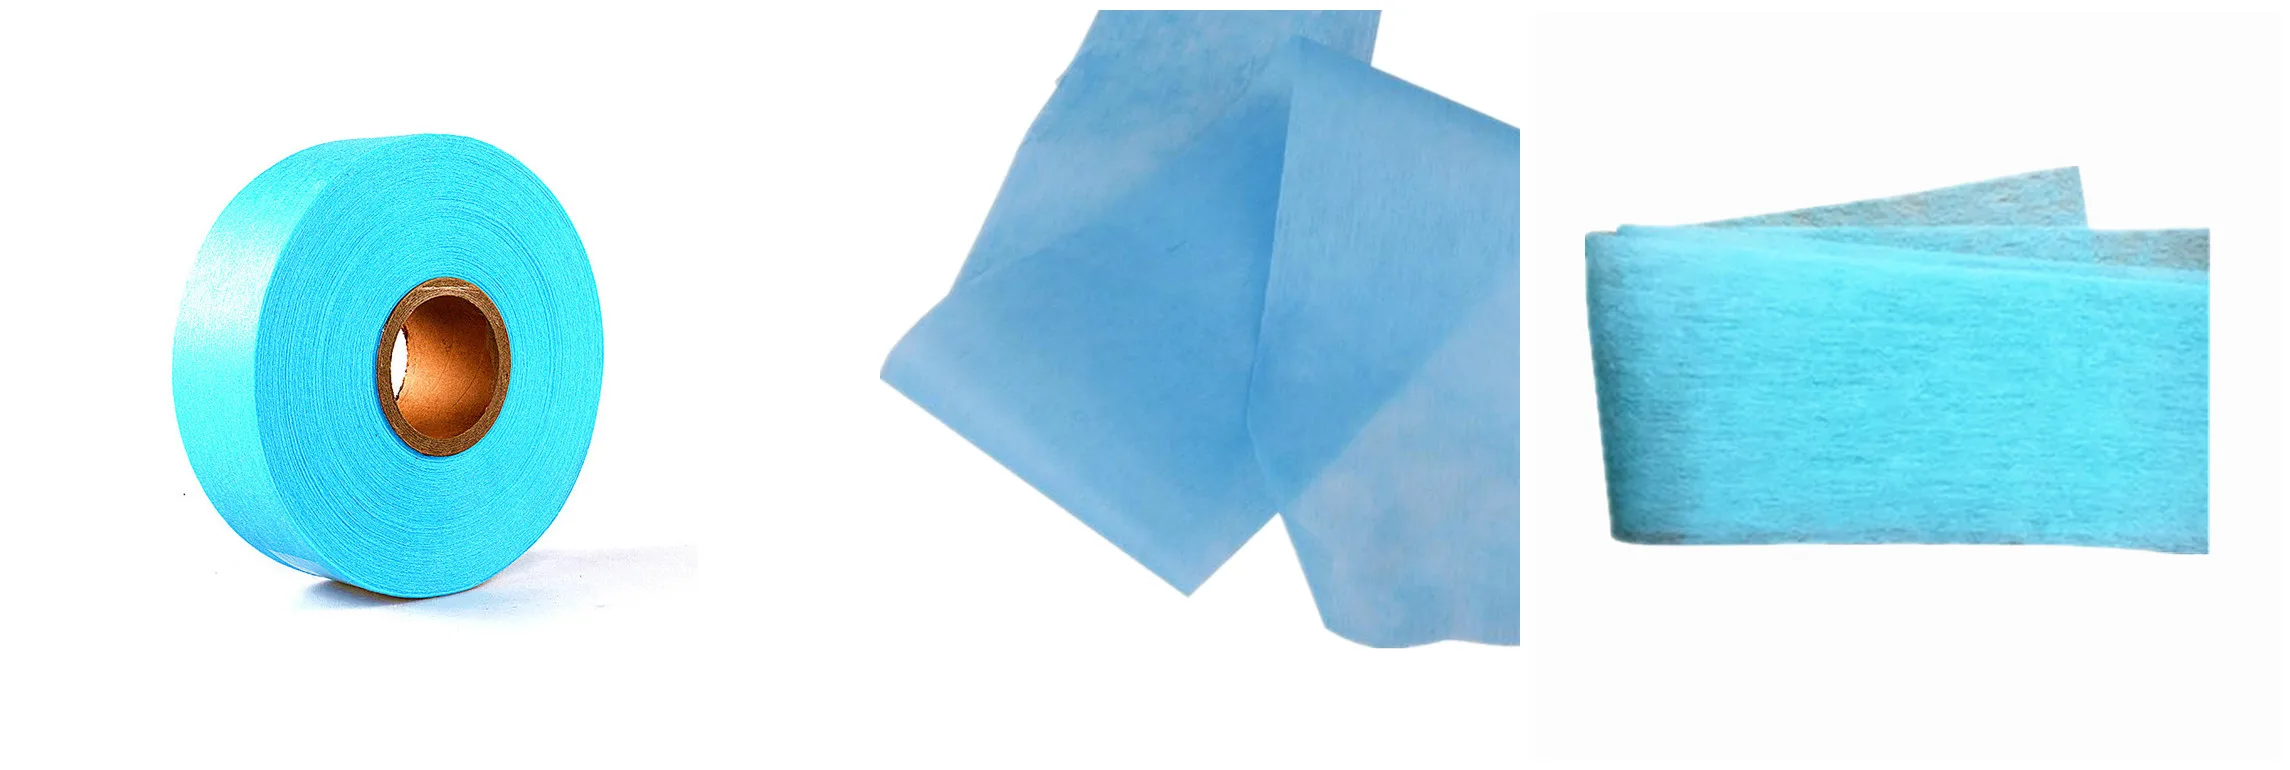 Grande couche jetable ADL bleue absorbante avec tissu non tissé